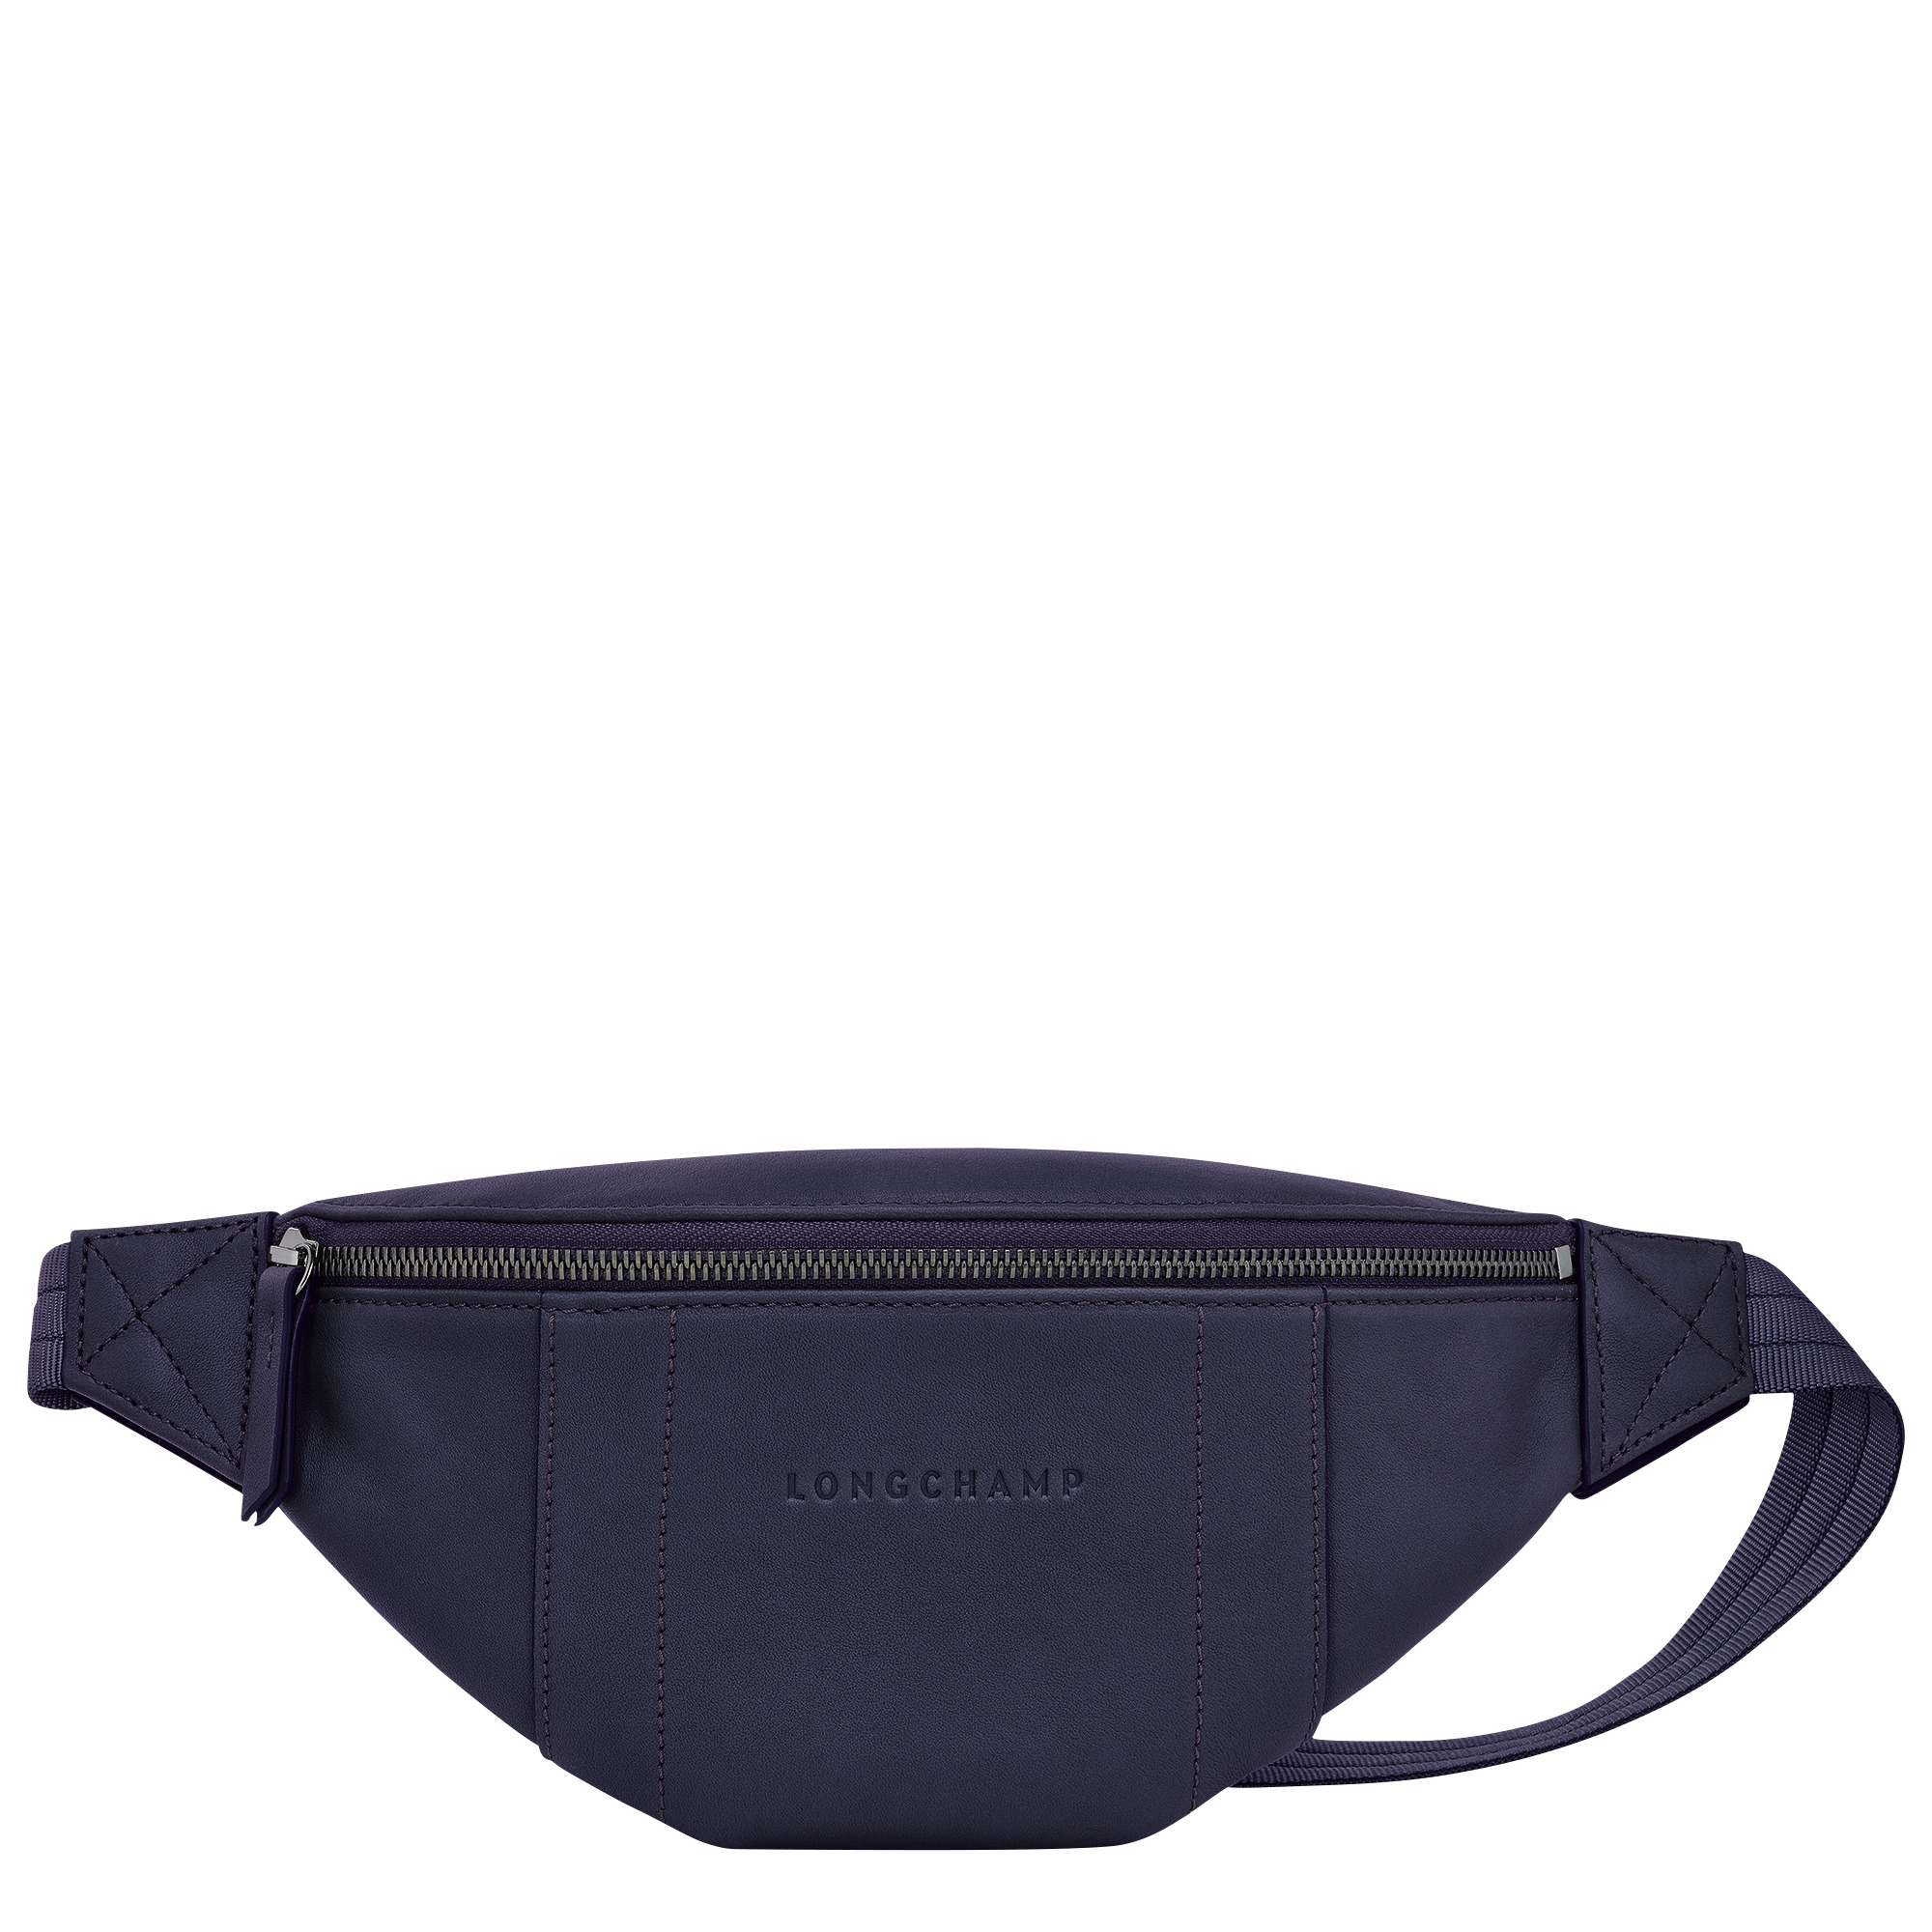 Longchamp 3D S Belt bag Bilberry - Leather - 1